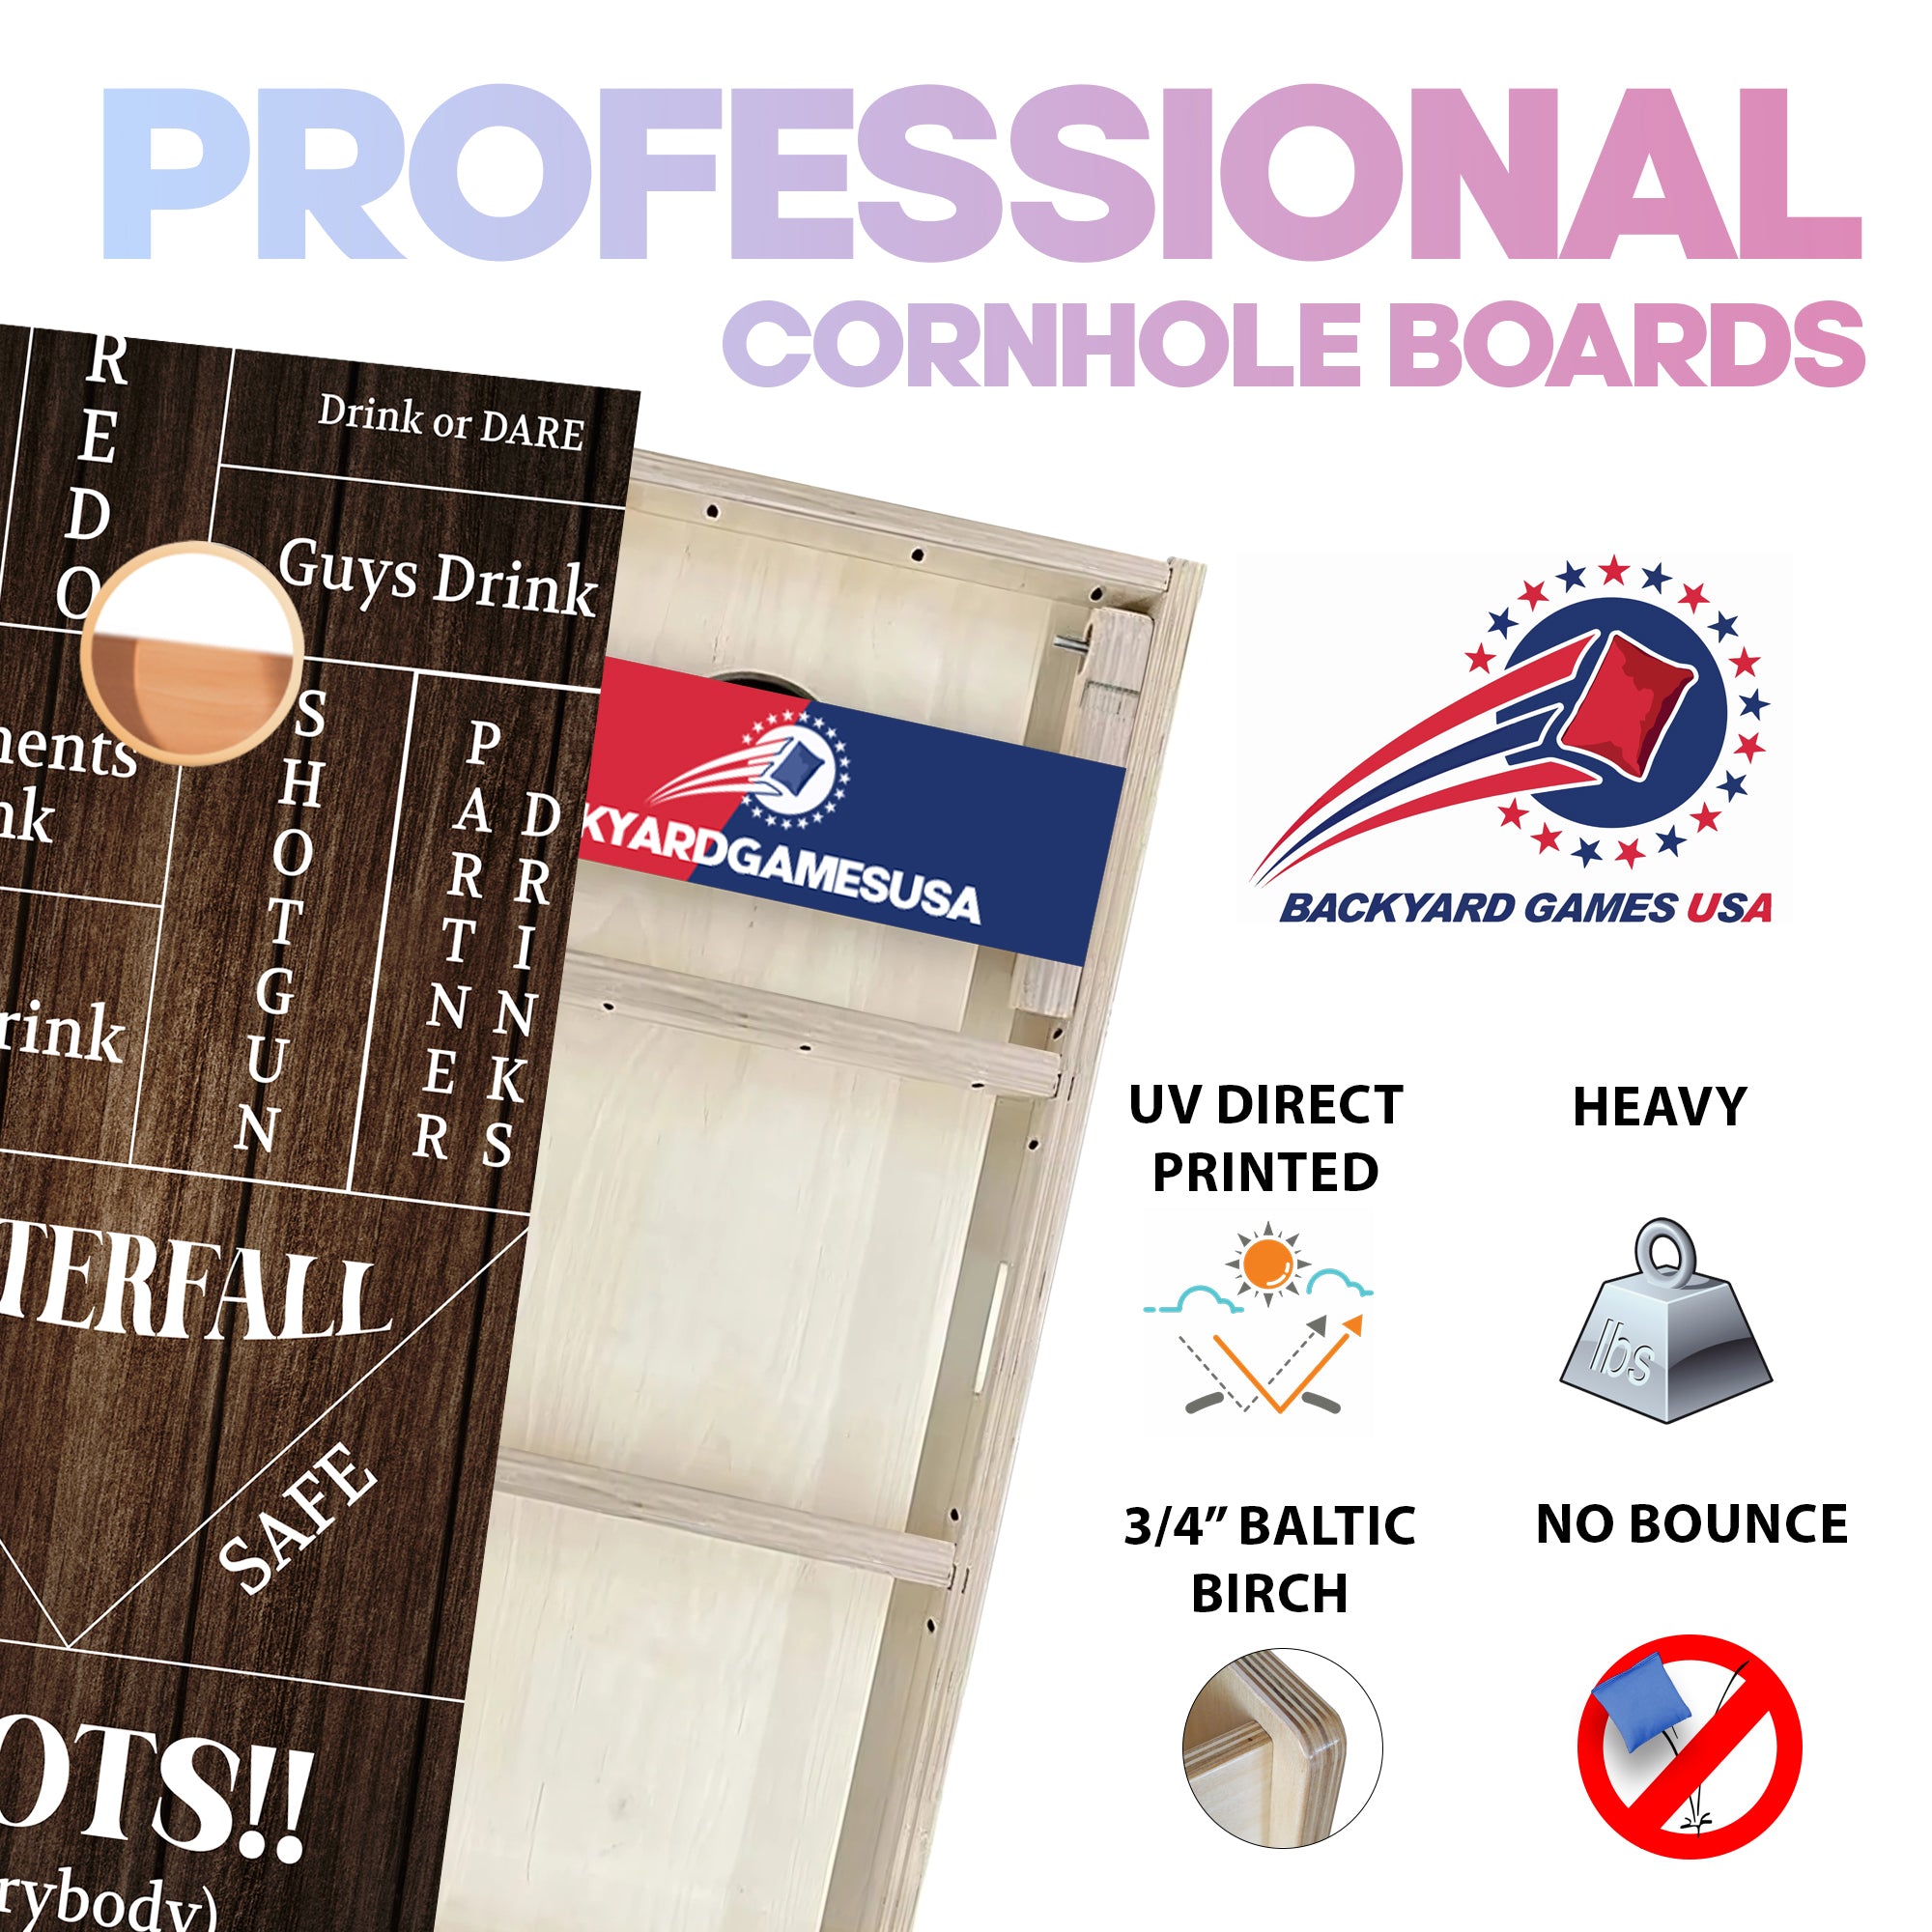 Wood Drink Professional Cornhole Boards